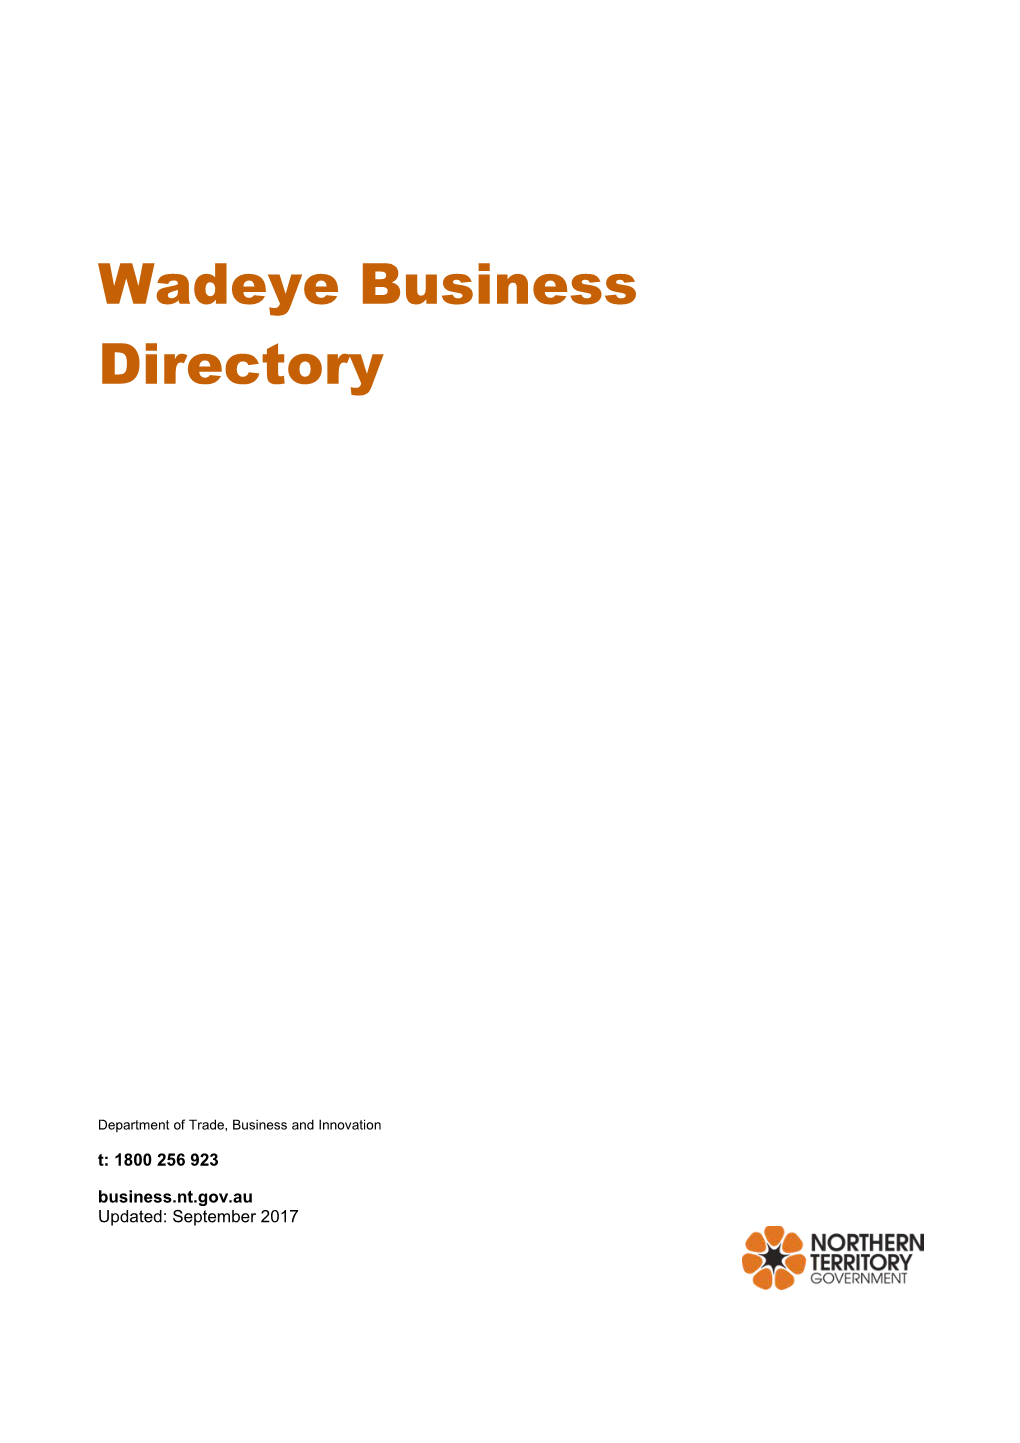 Wadeye Business Directory